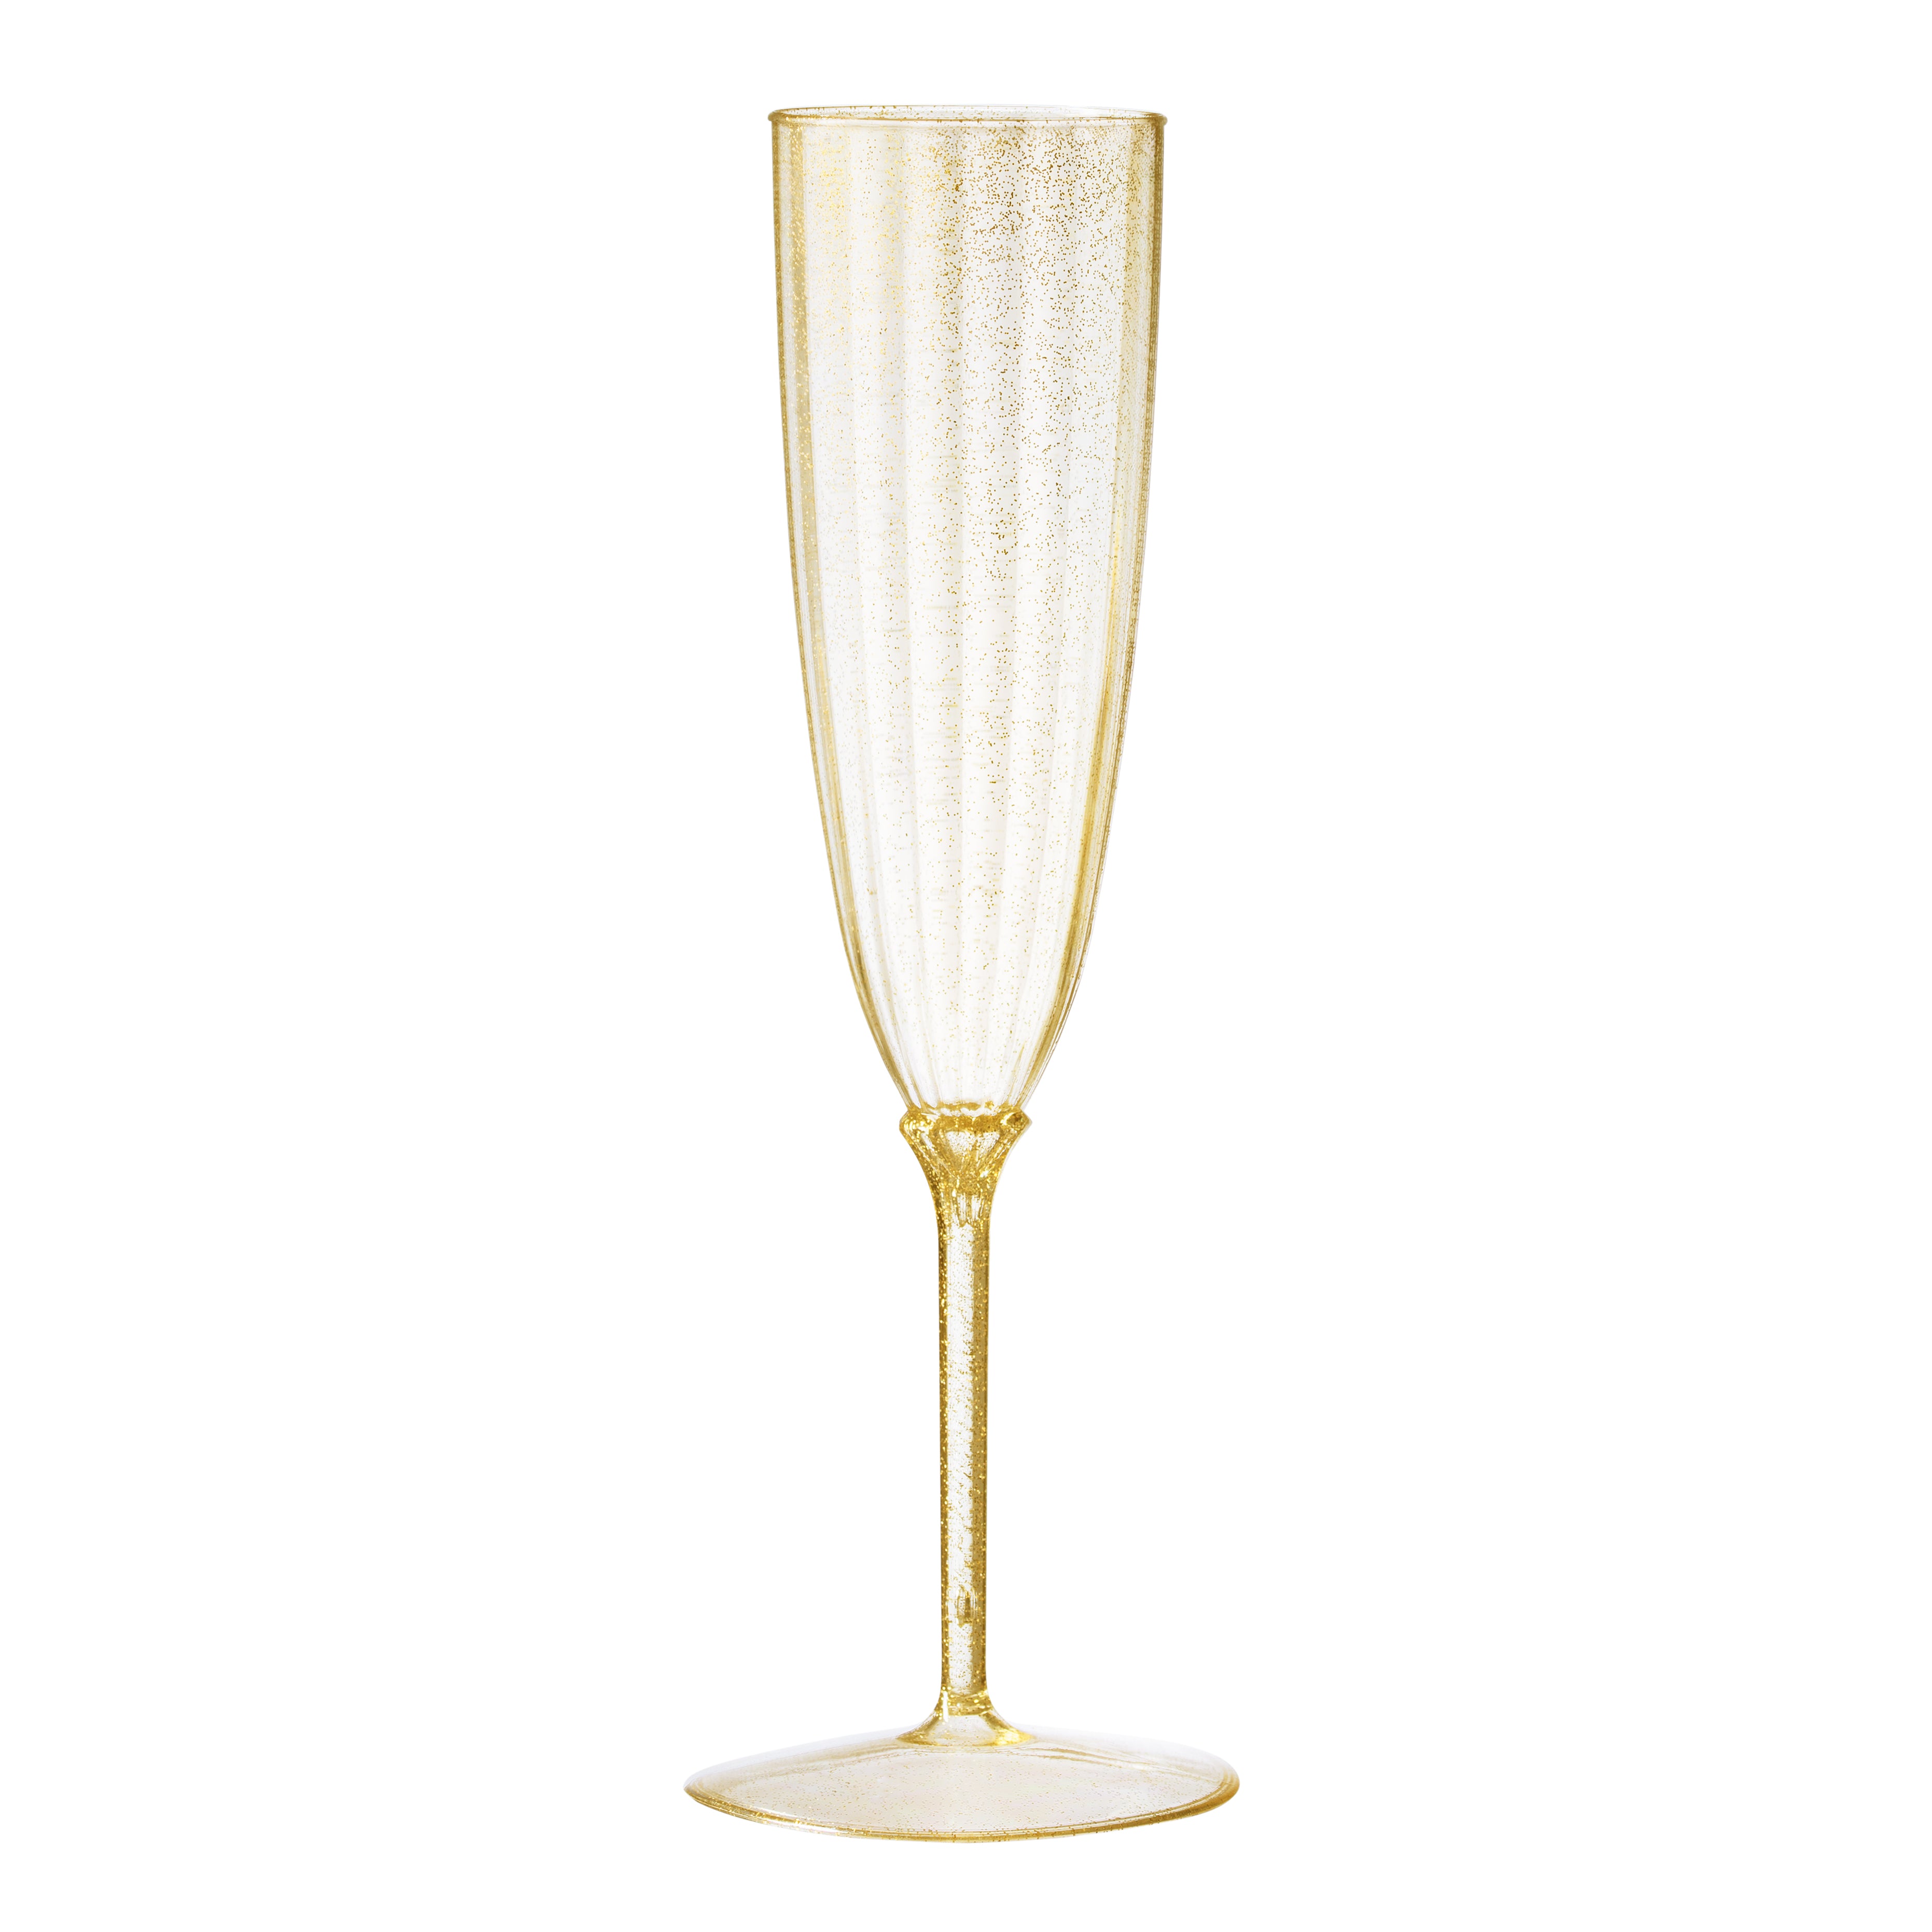 Rose Gold Plastic Champagne Flutes Disposable - Rose Gold Glitter